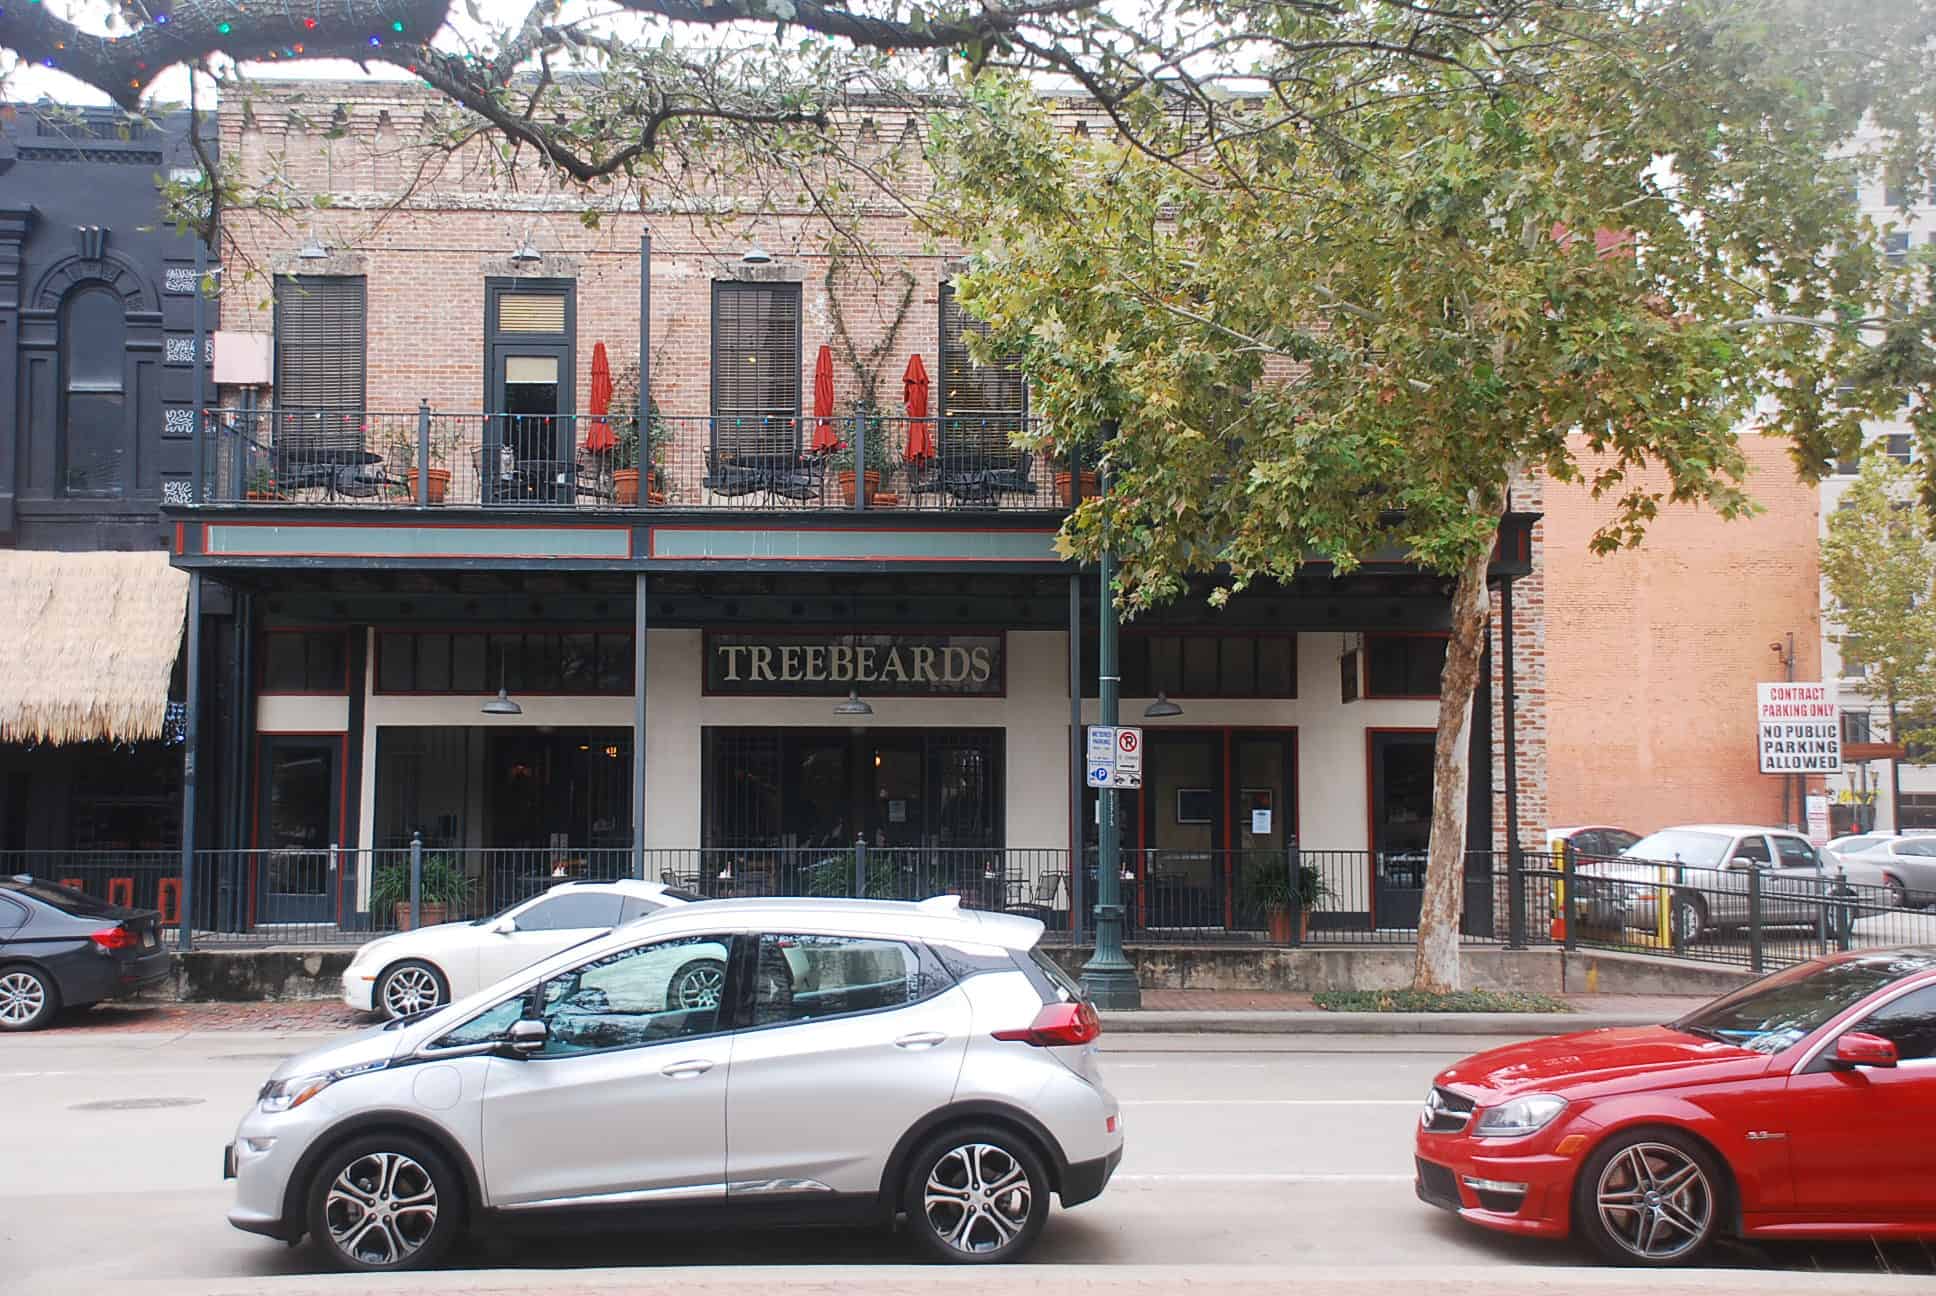 Treebeards Restaurant adjacent to Market Square Park